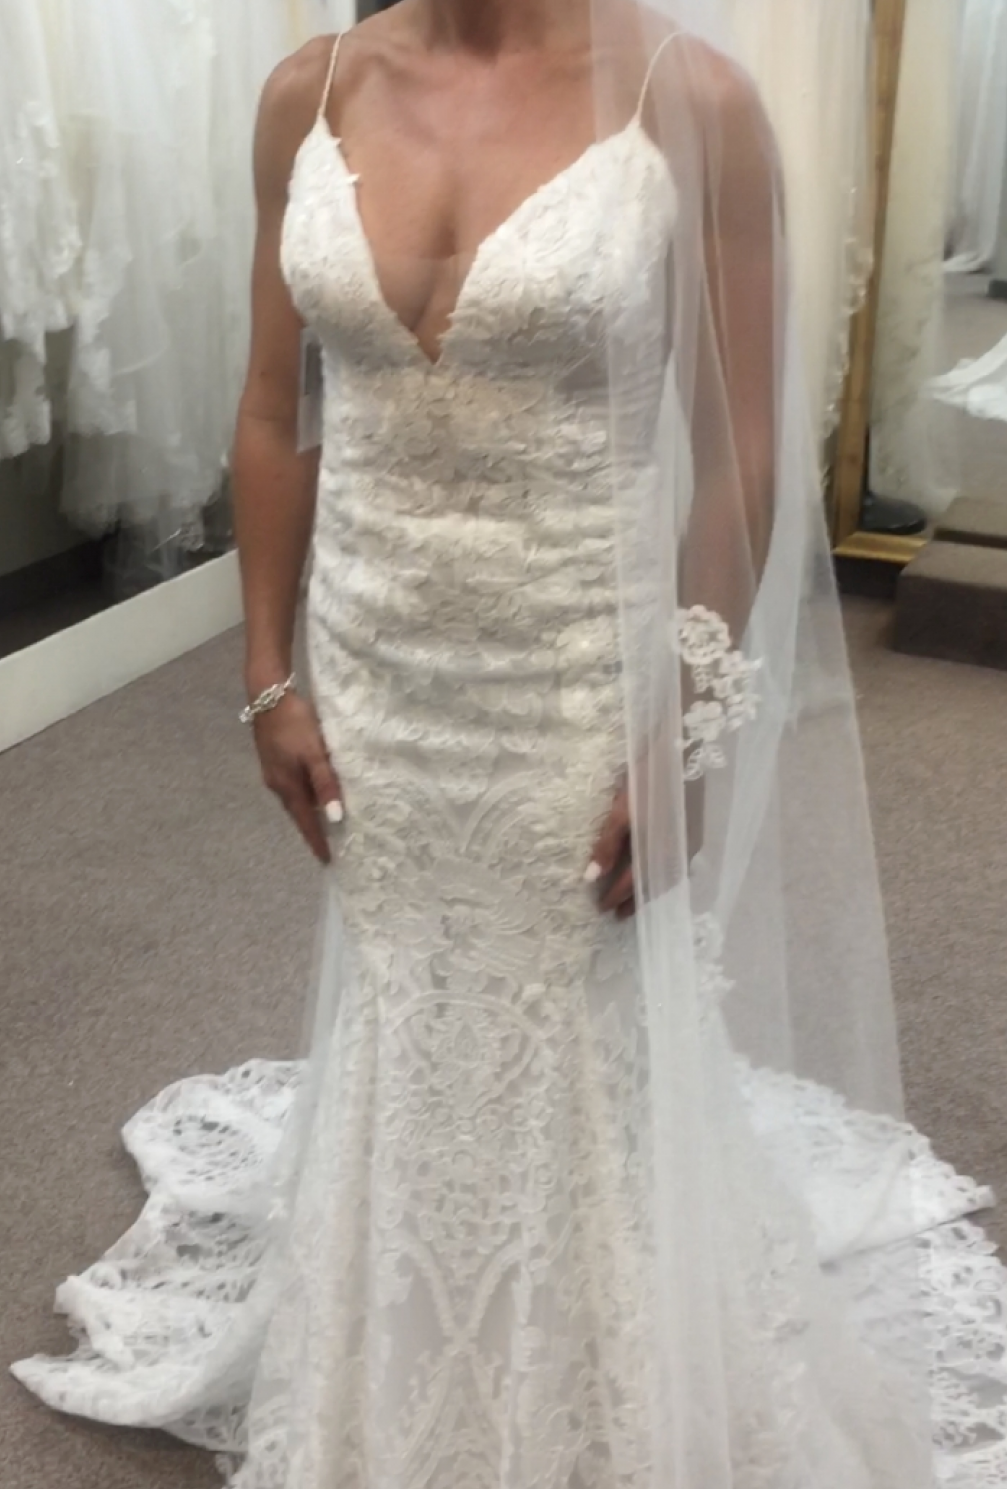 Watters 'Monique Lhuillier' wedding dress size-06 NEW